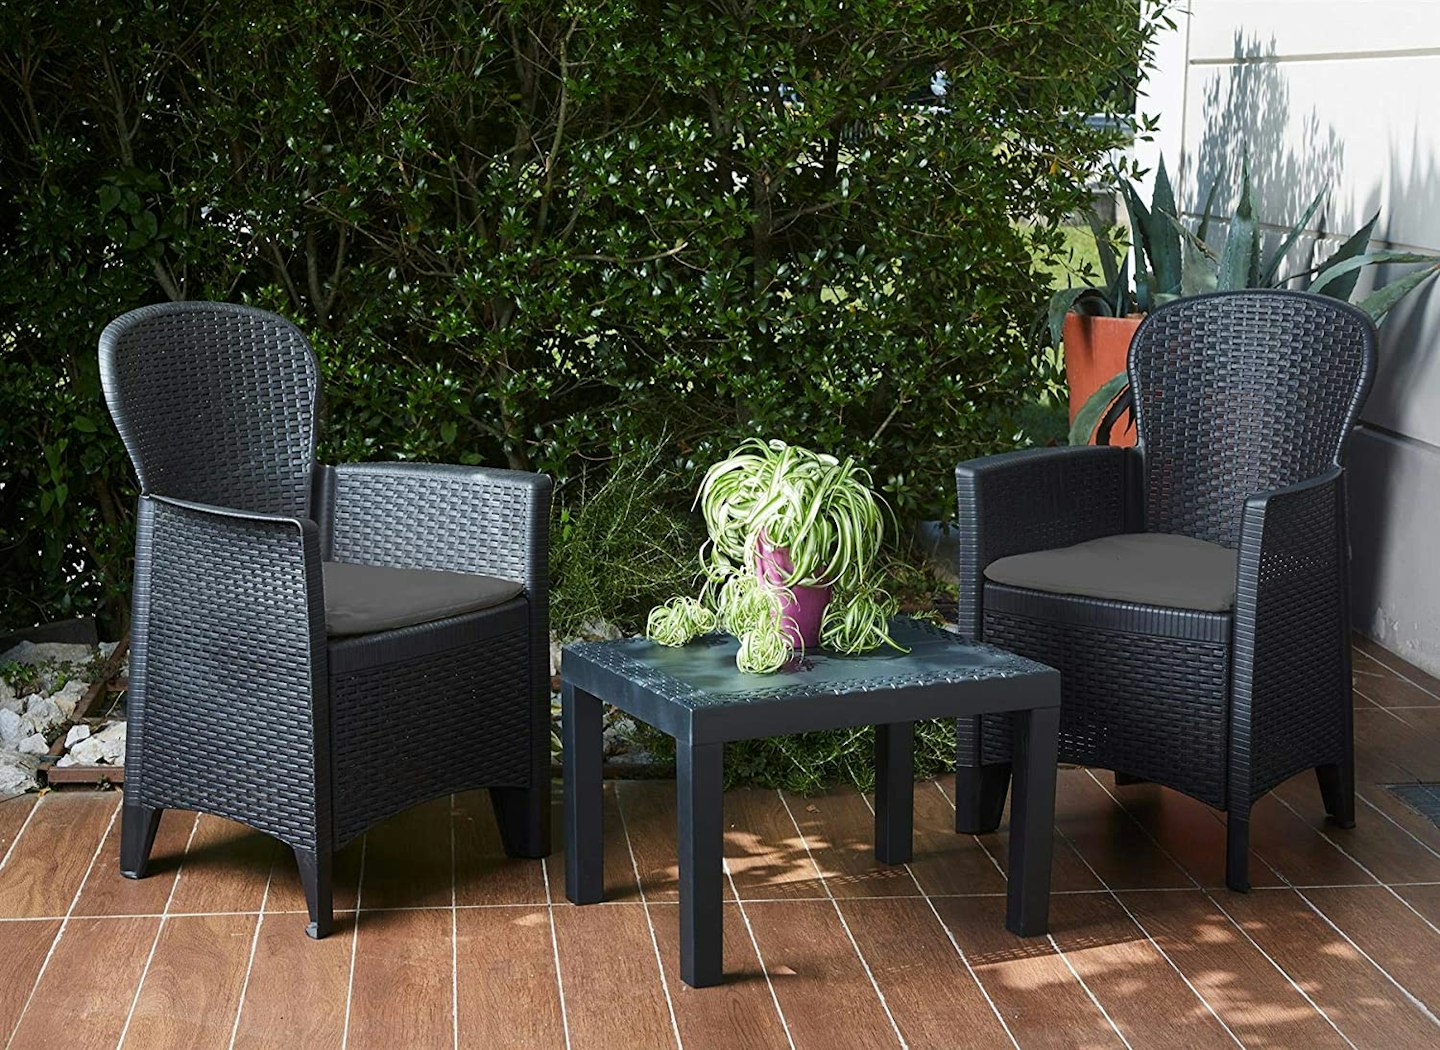 idooka Tea for 2 Outdoor Garden Furniture Set